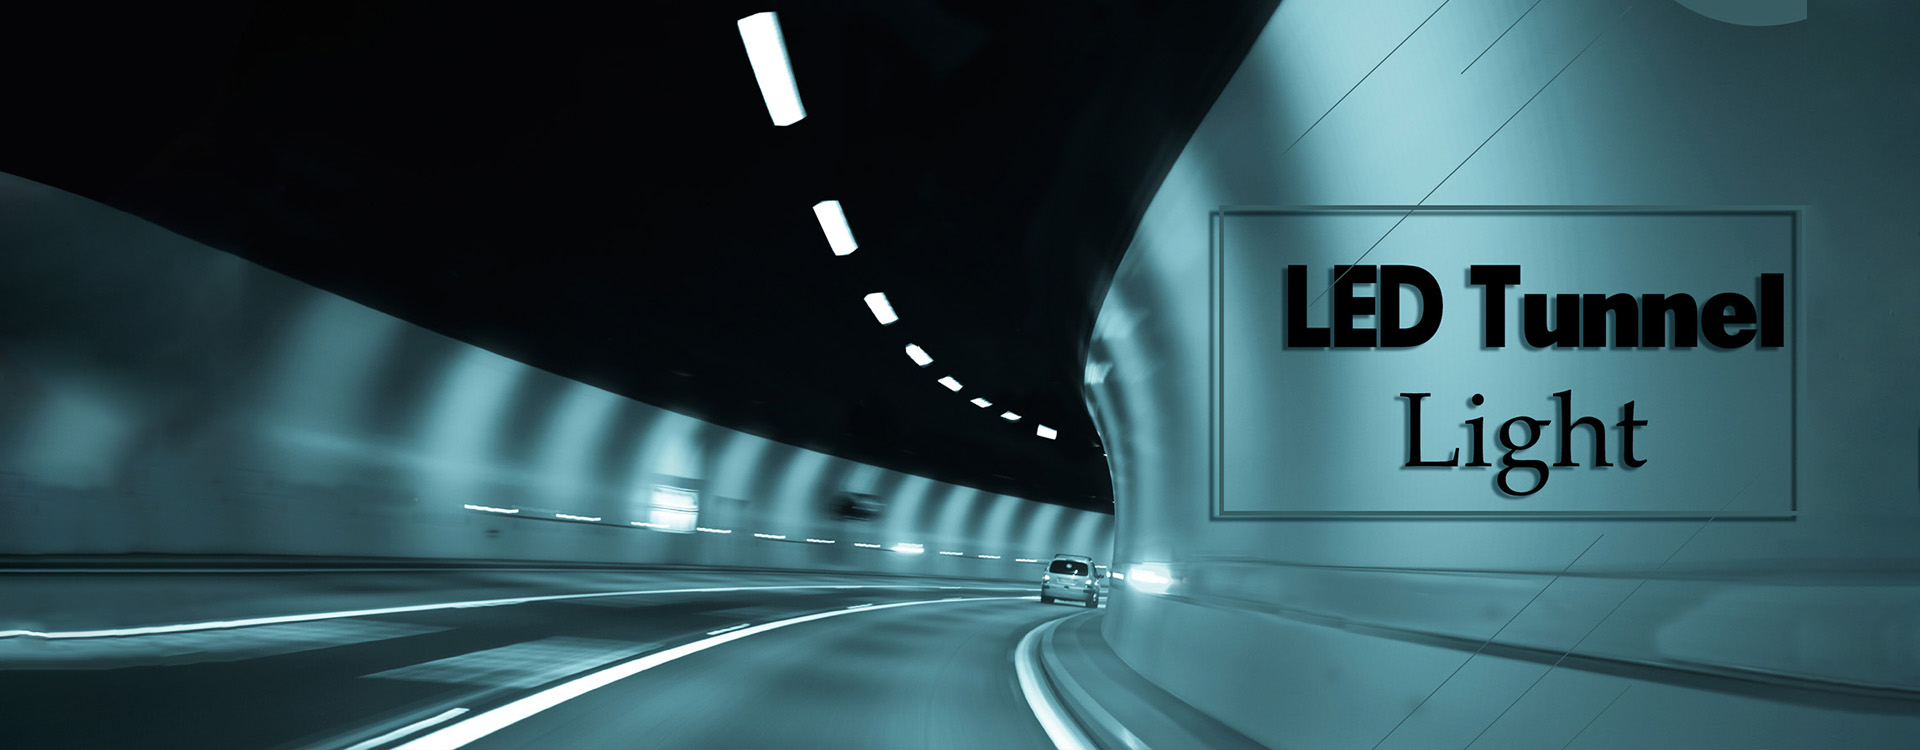 led-tunnel-light-21